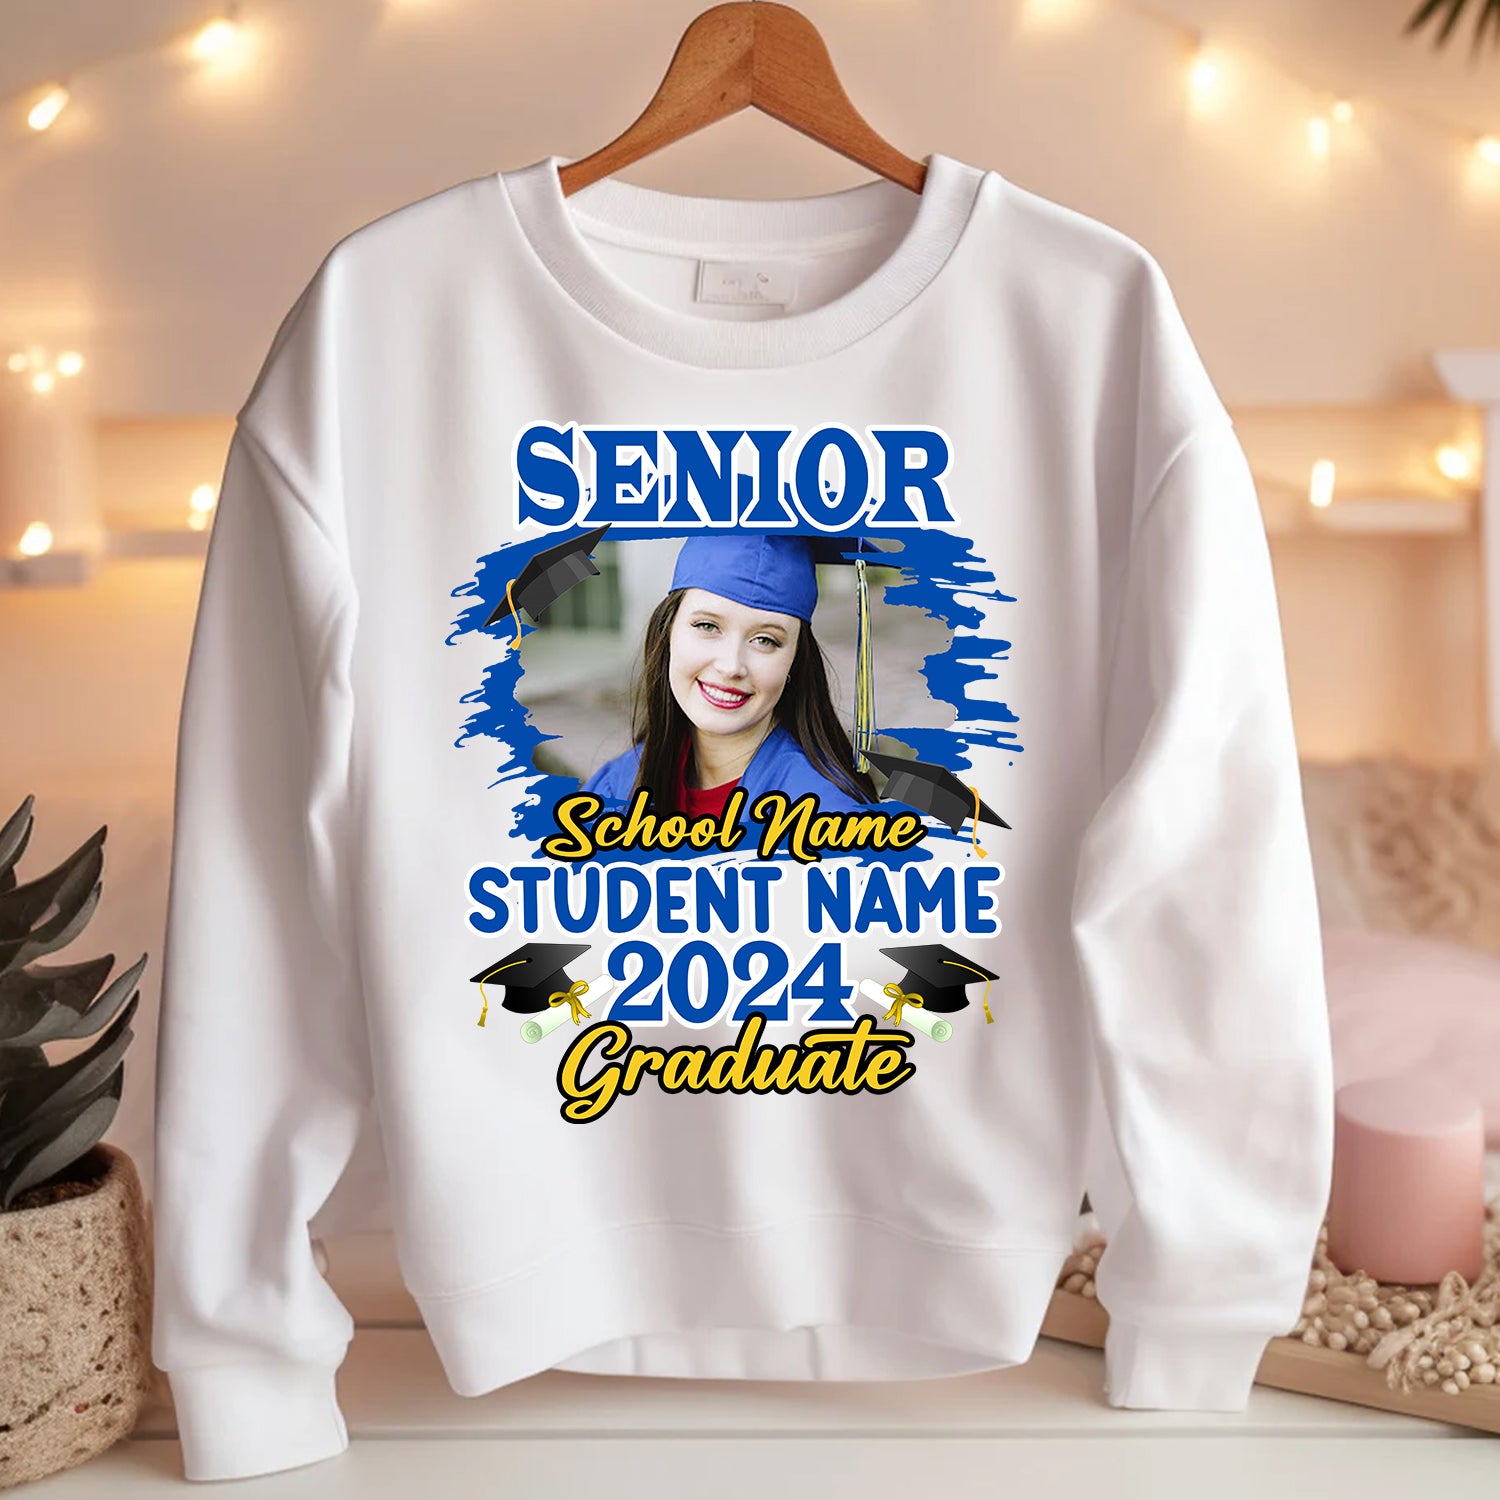 Congrats Senior Graduate 2024 - Custom Photo And Texts Graduation Gift - Personalized Light Sweatshirt